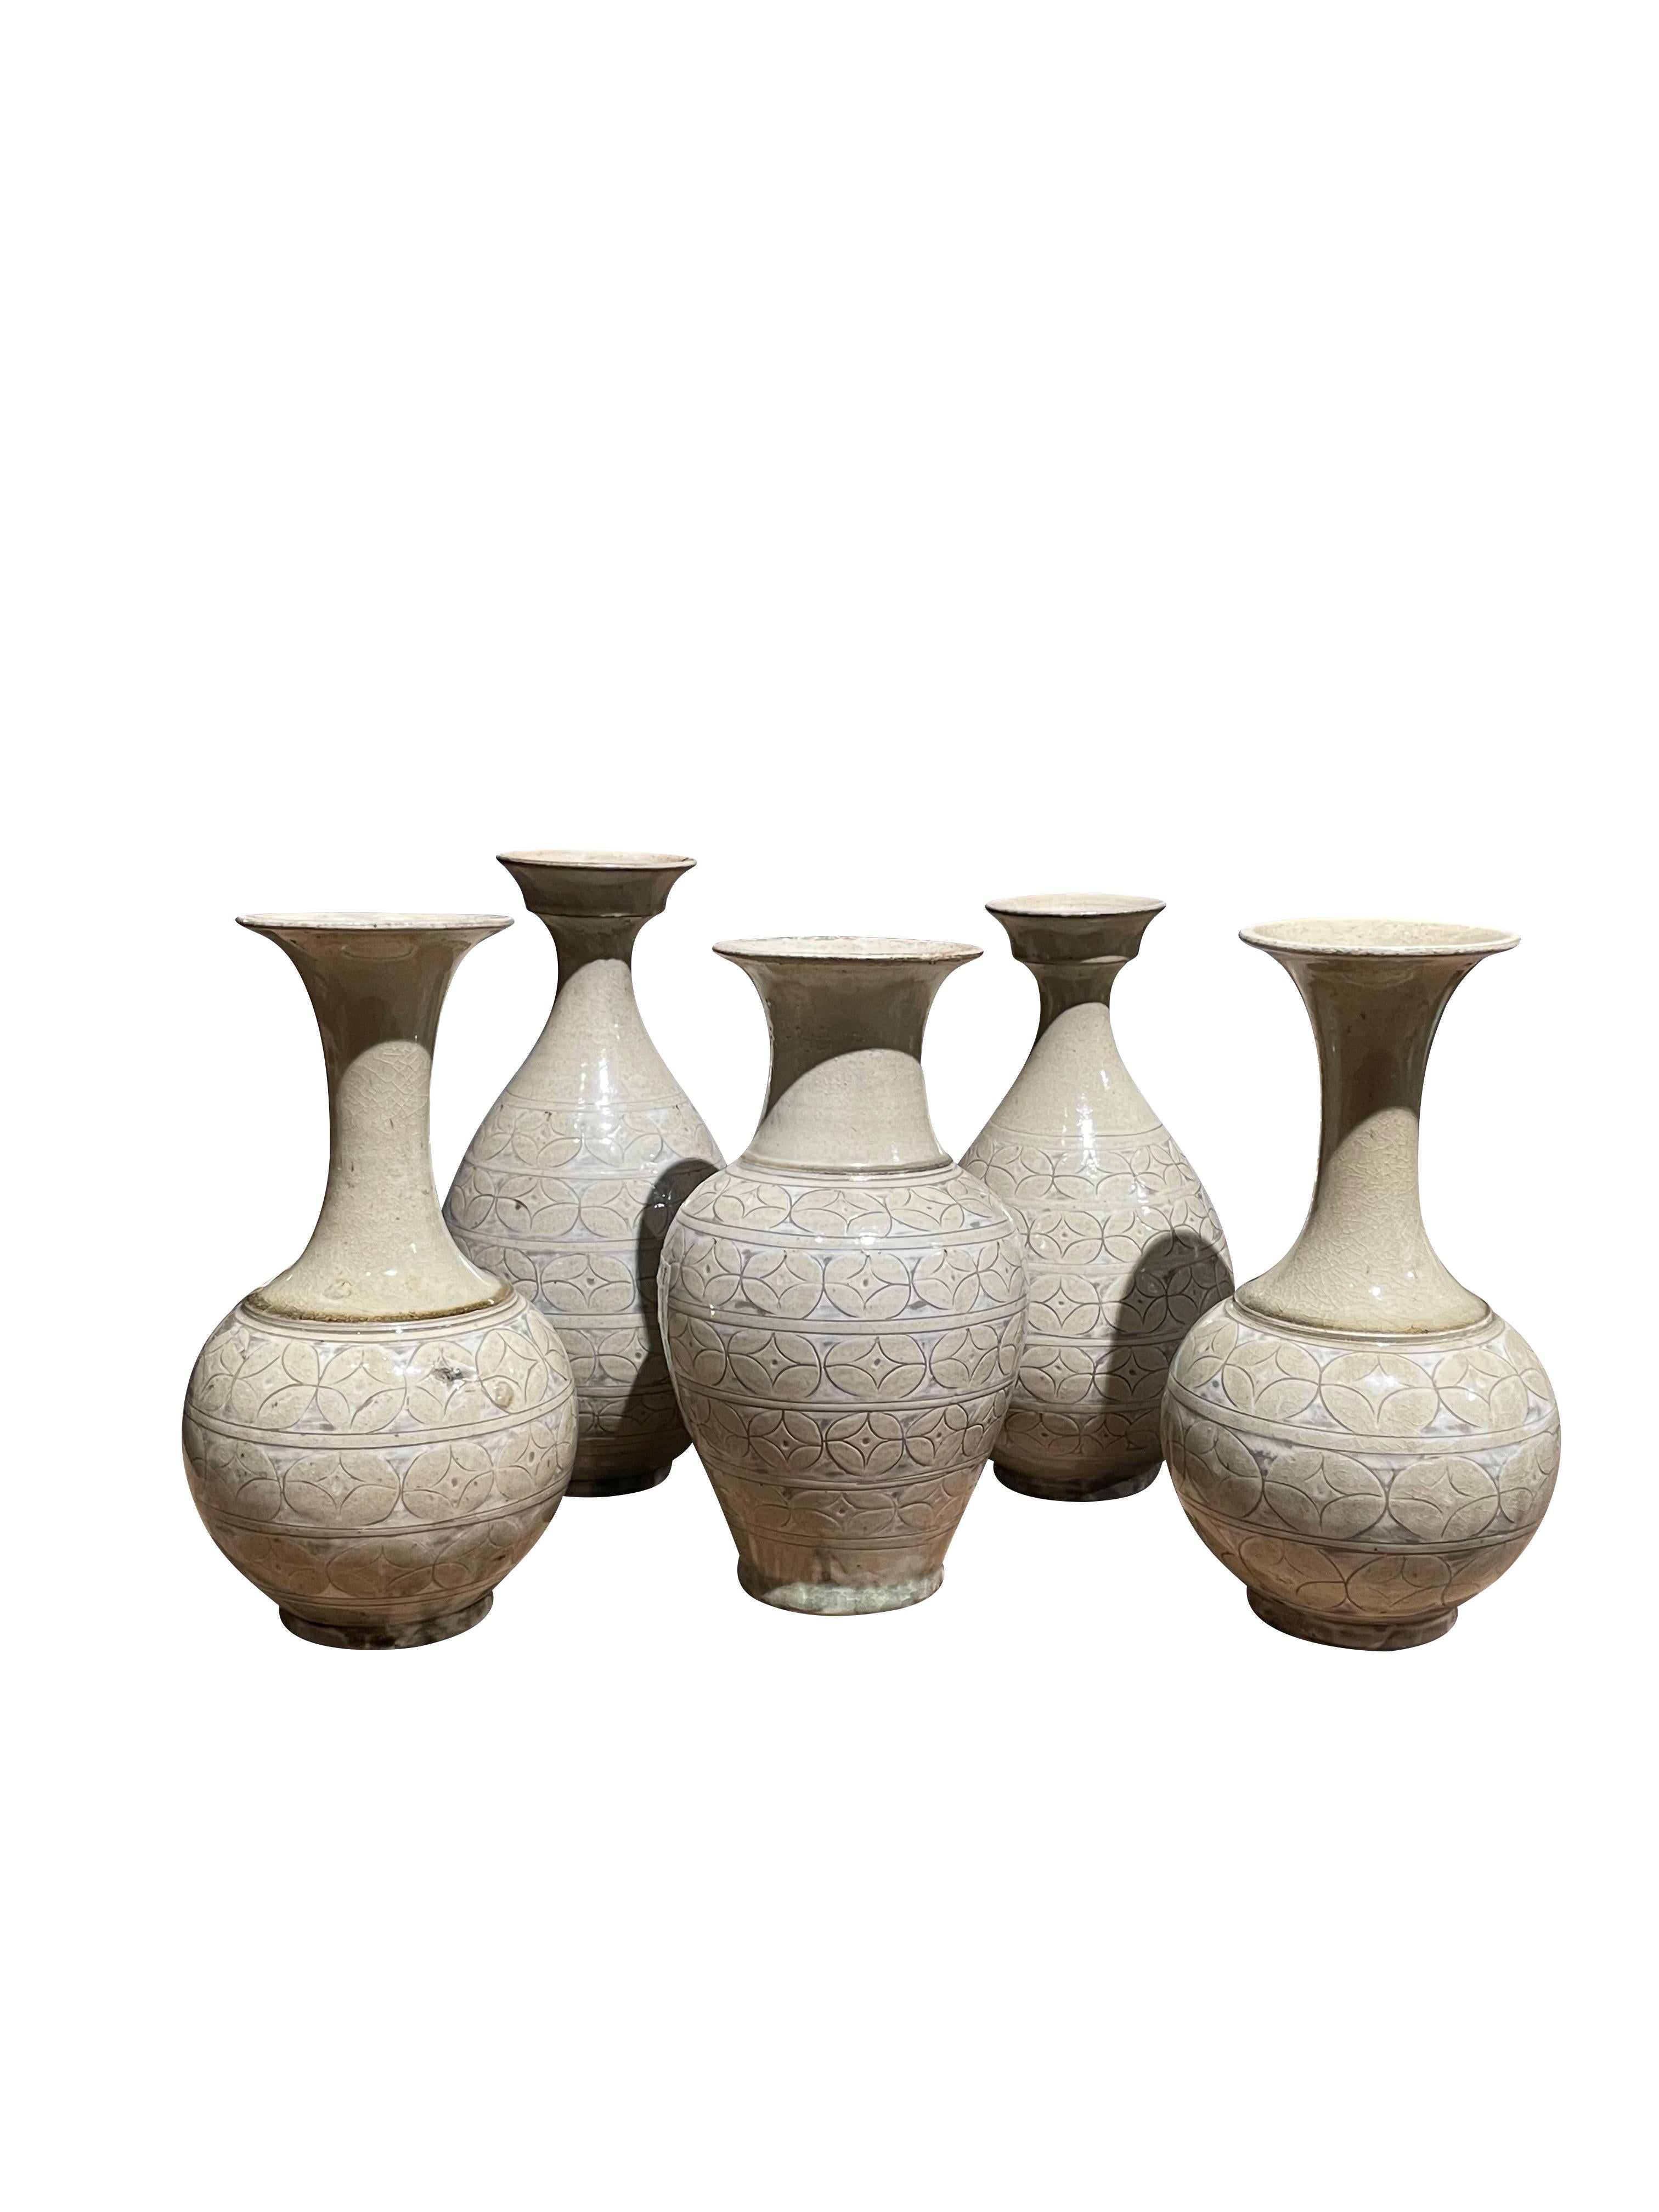 Cream Decorative Patterned Ceramic Vase, China, Contemporary  For Sale 1